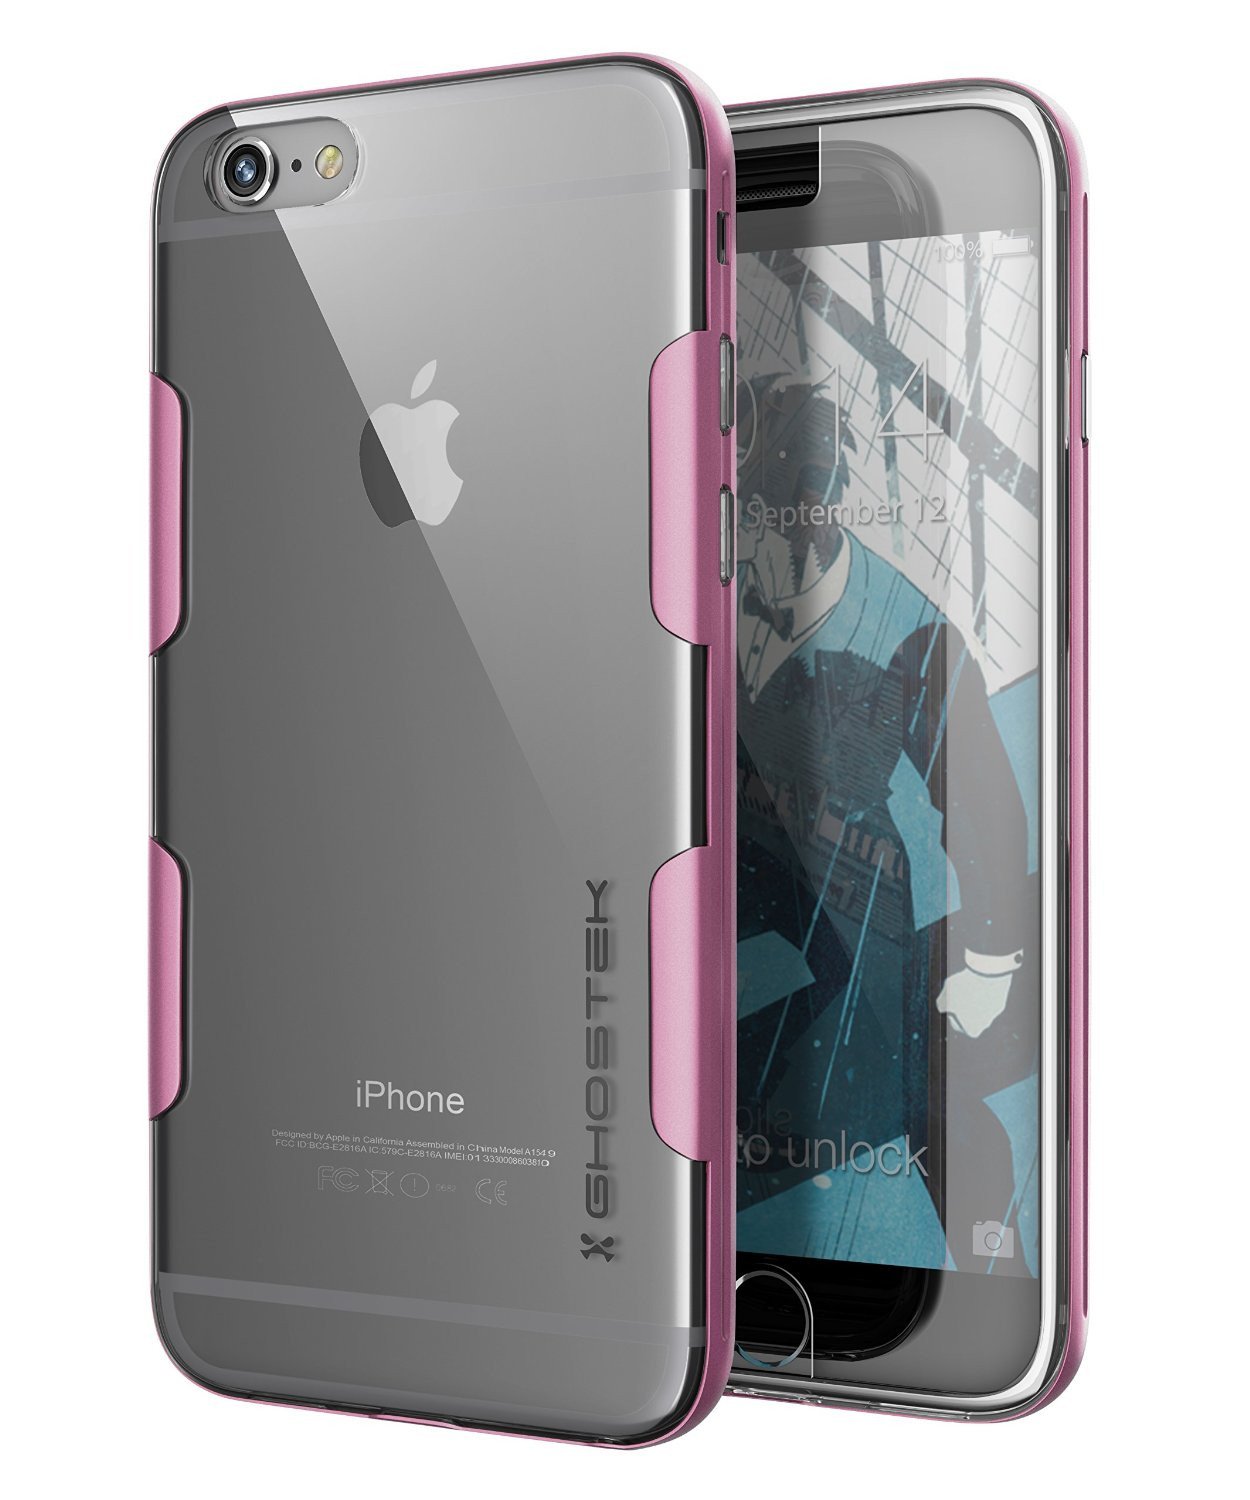 iPhone 6s Plus Case Pink Ghostek Cloak, Slim Protective Armor w/ Tempered Glass | Lifetime Warranty